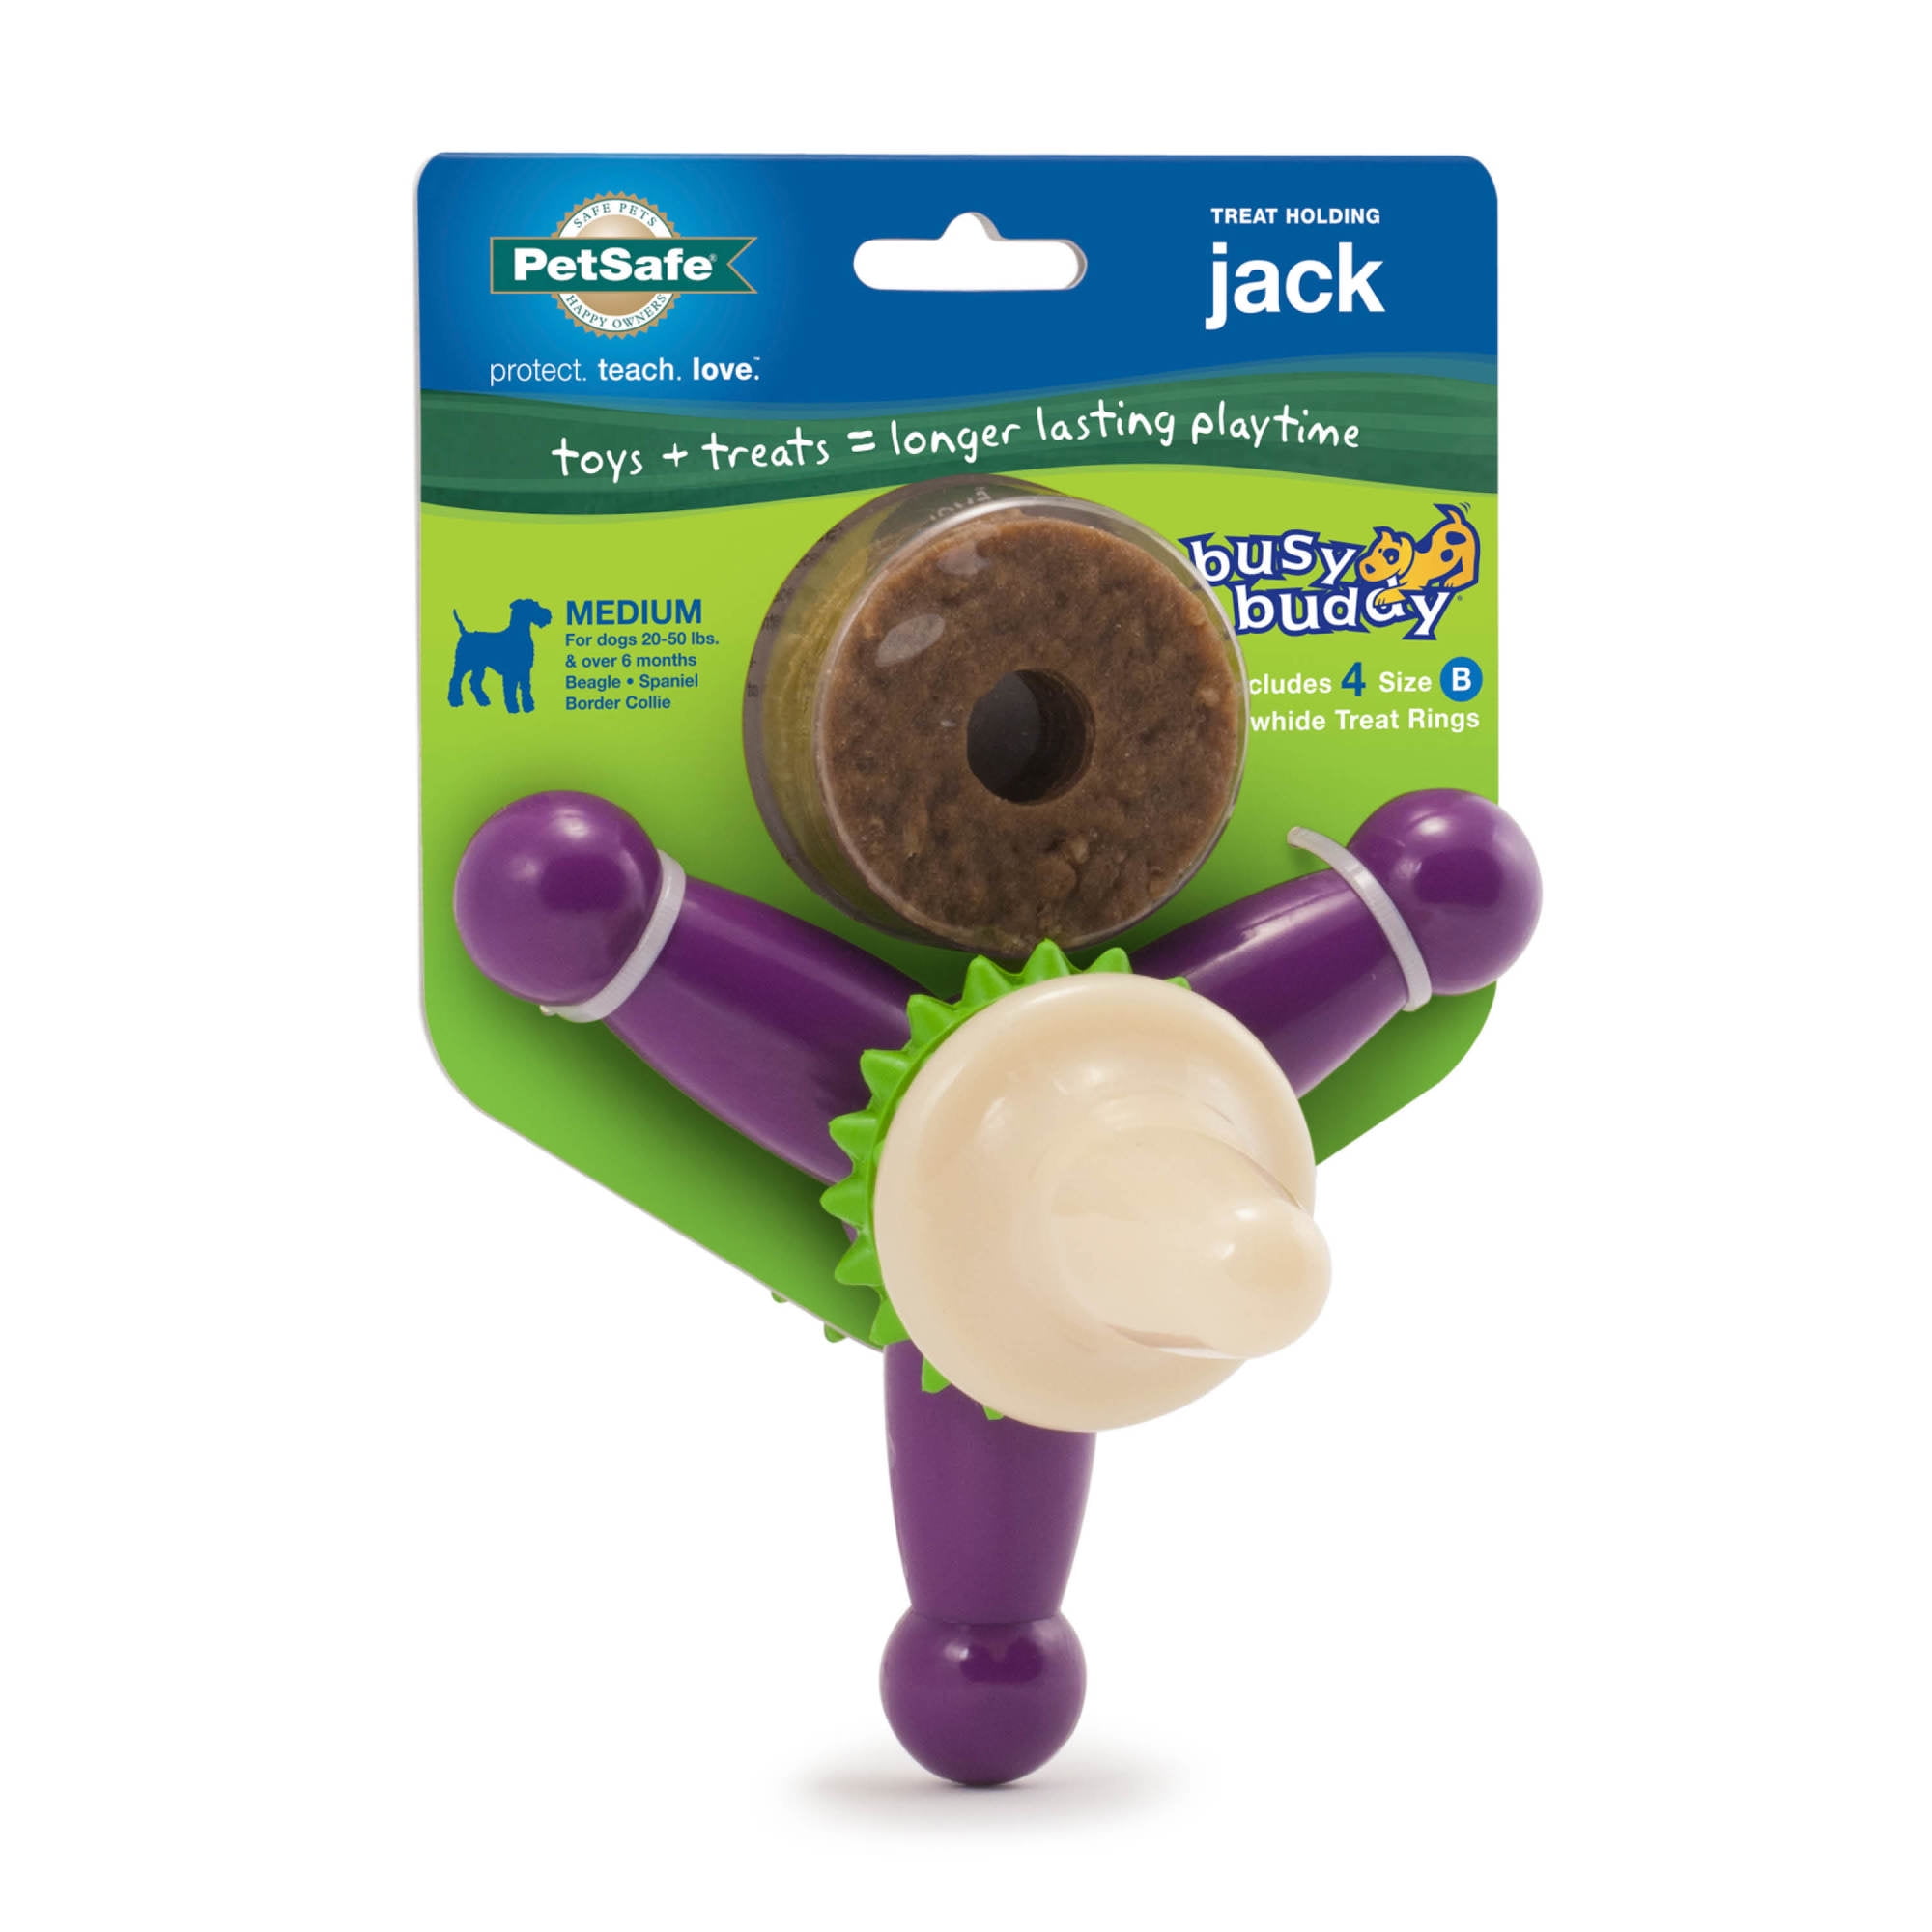 PetSafe Busy Buddy Jack Dog Toy, Medium